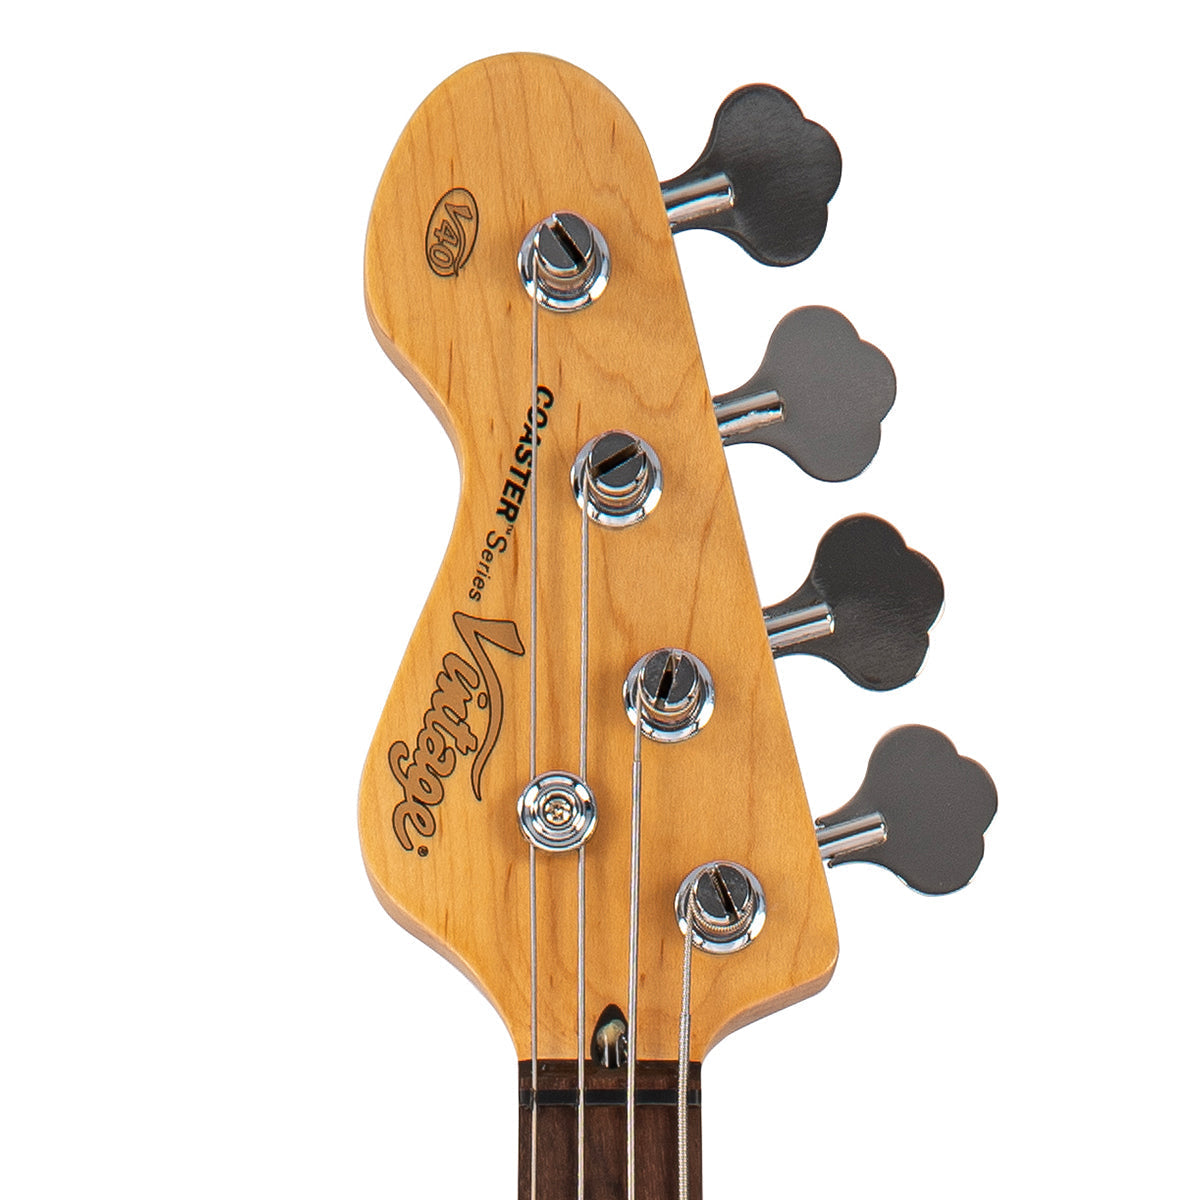 Vintage V40 Coaster Series Bass Guitar ~ Left Hand Boulevard Black, Bass Guitar for sale at Richards Guitars.